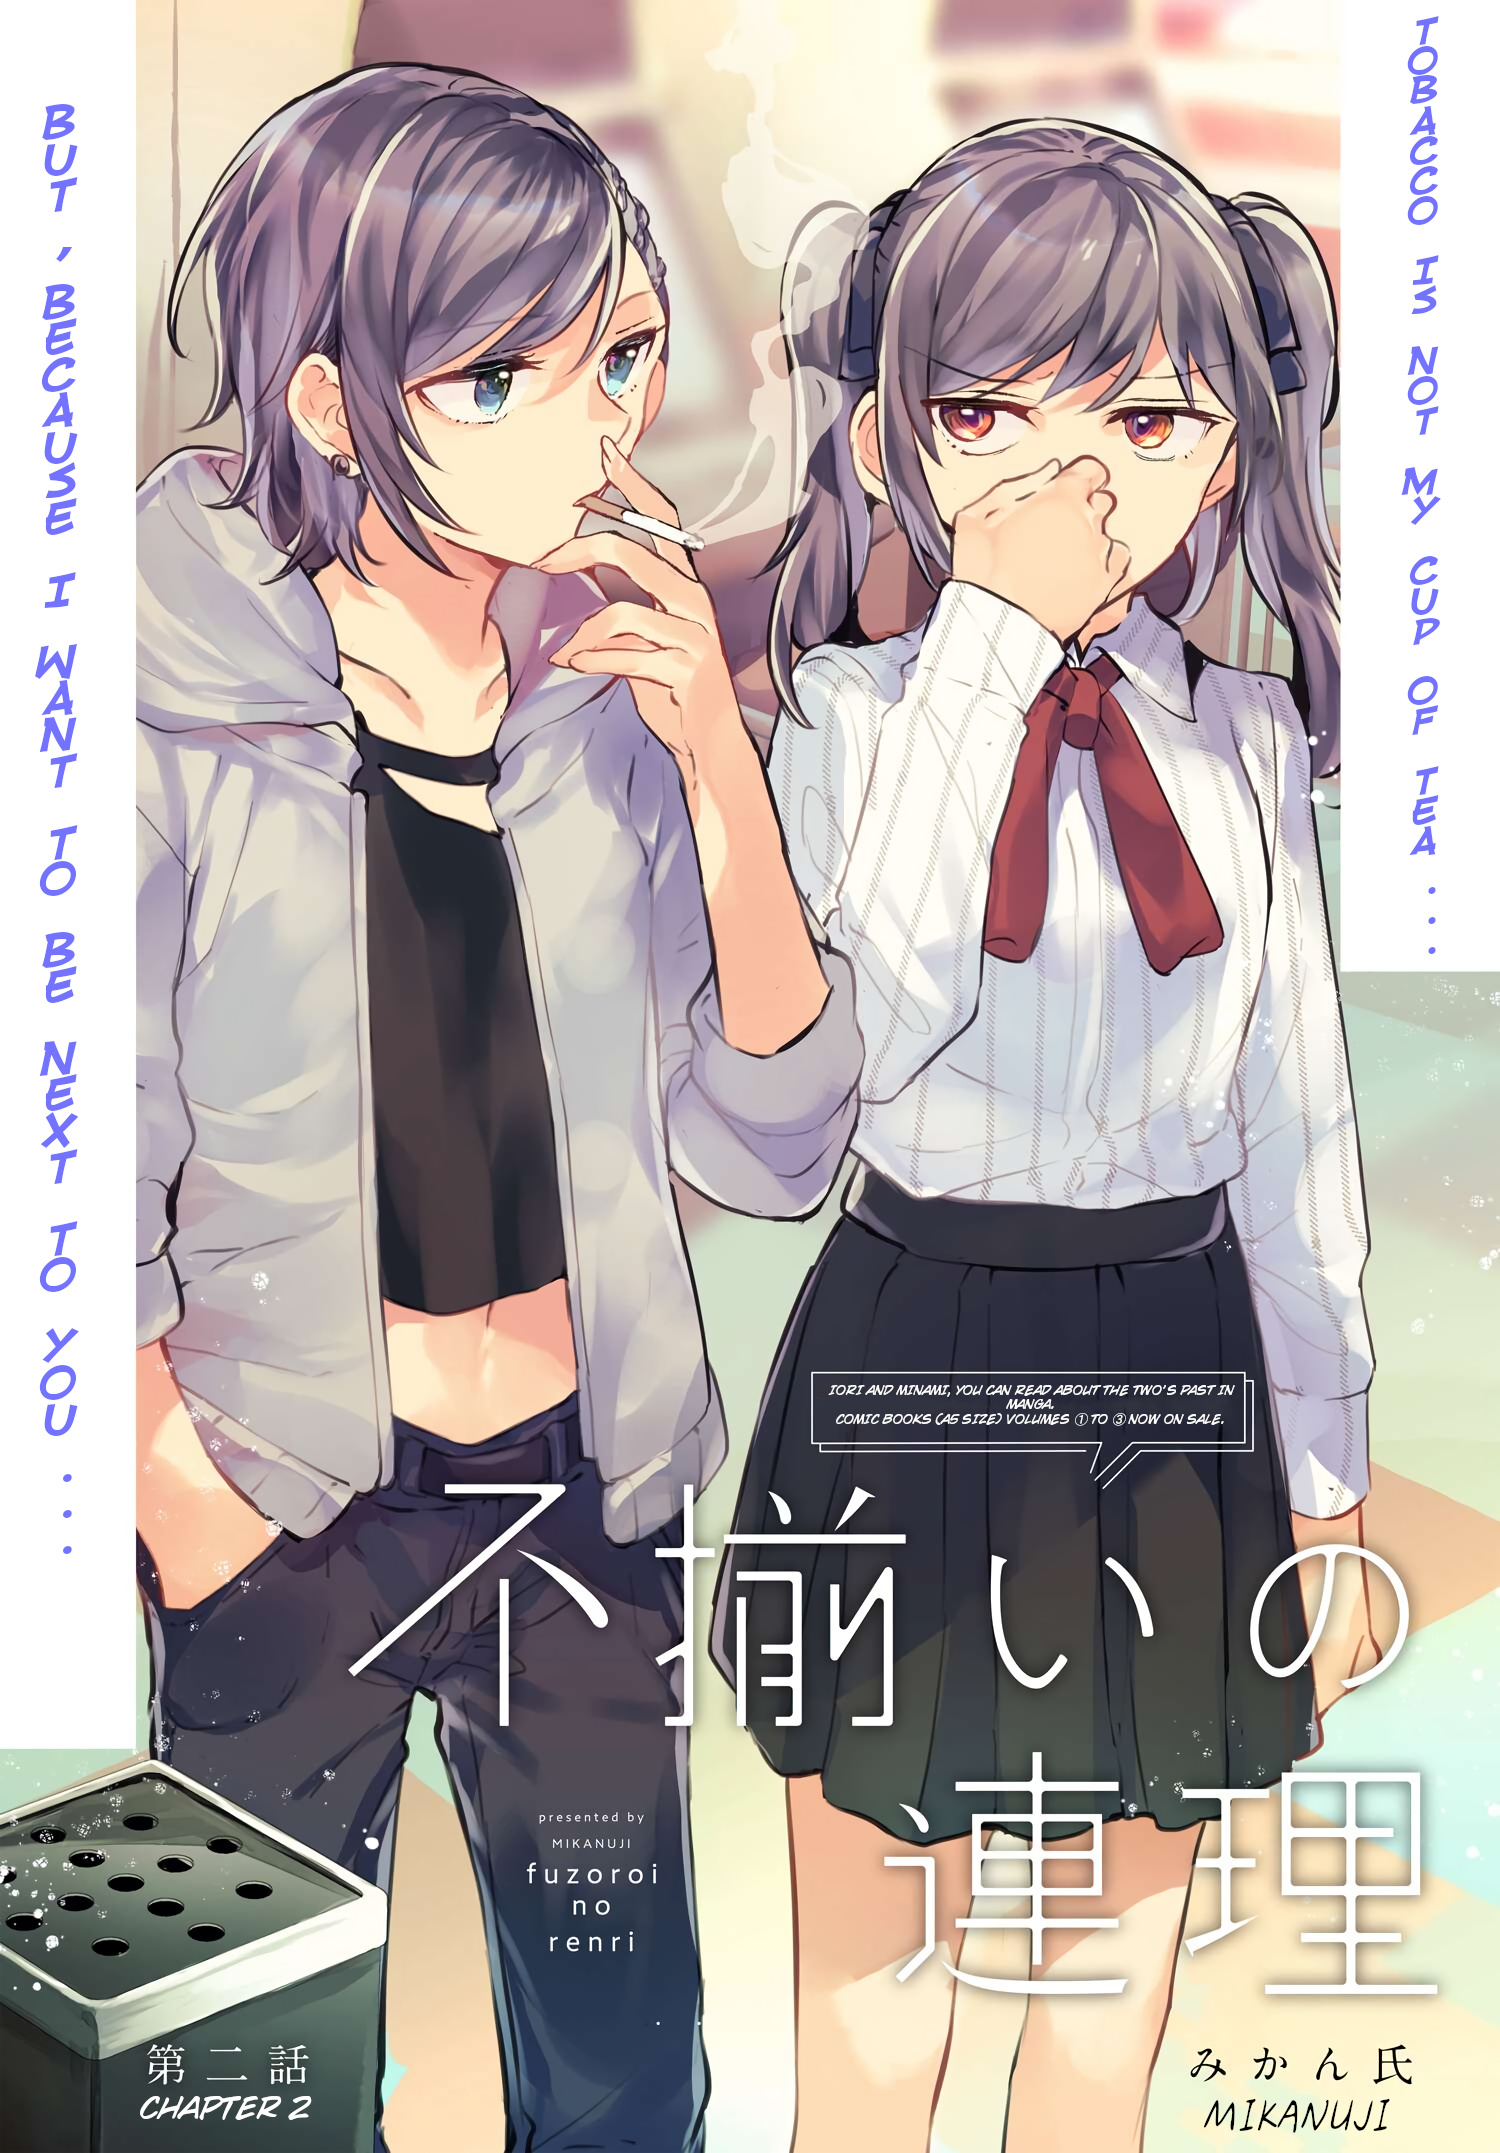 Fuzoroi No Renri - Side Stories - chapter 2 - #2